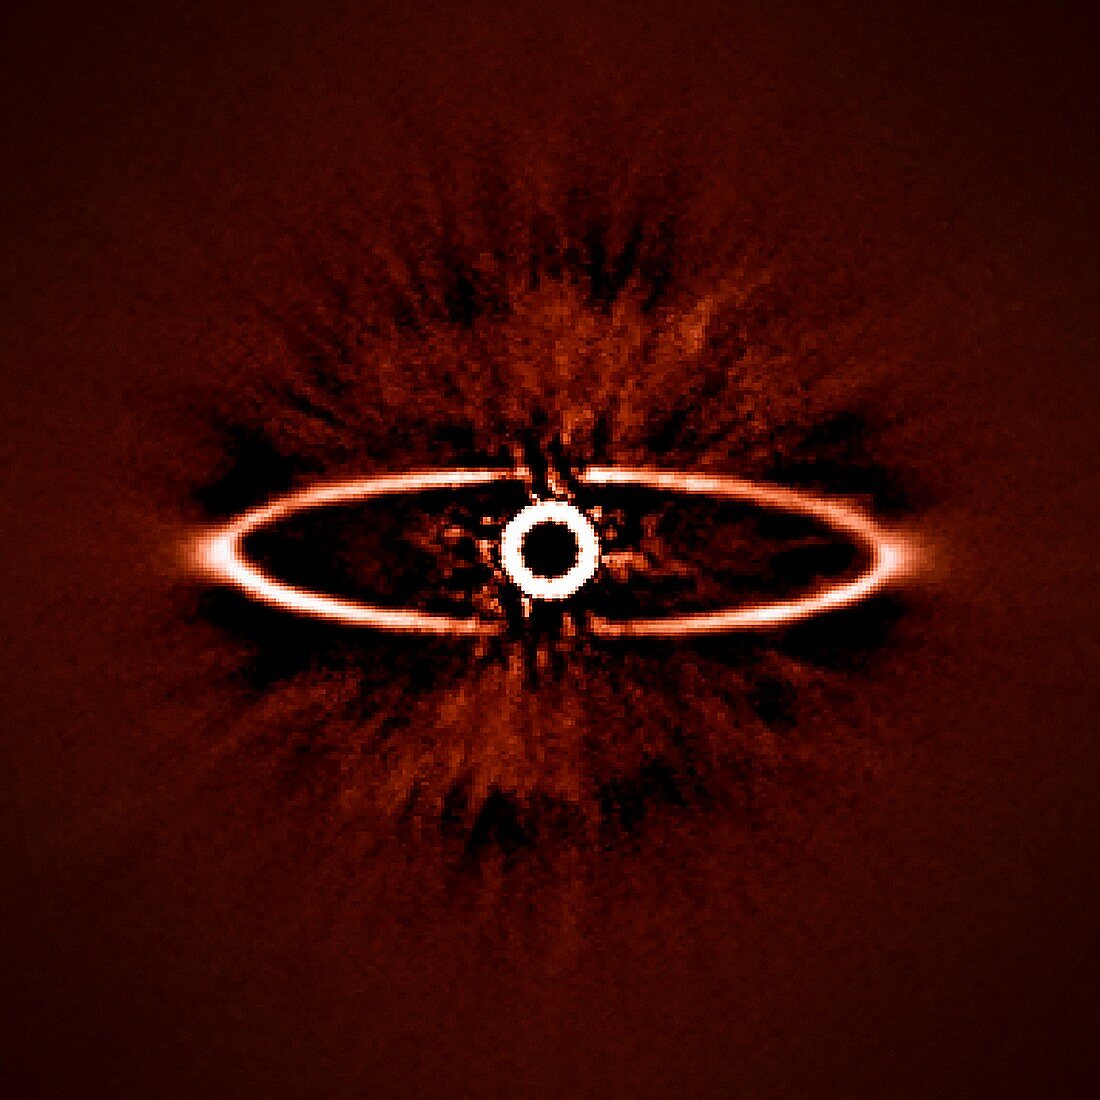 HR 479 dust ring,SPHERE image